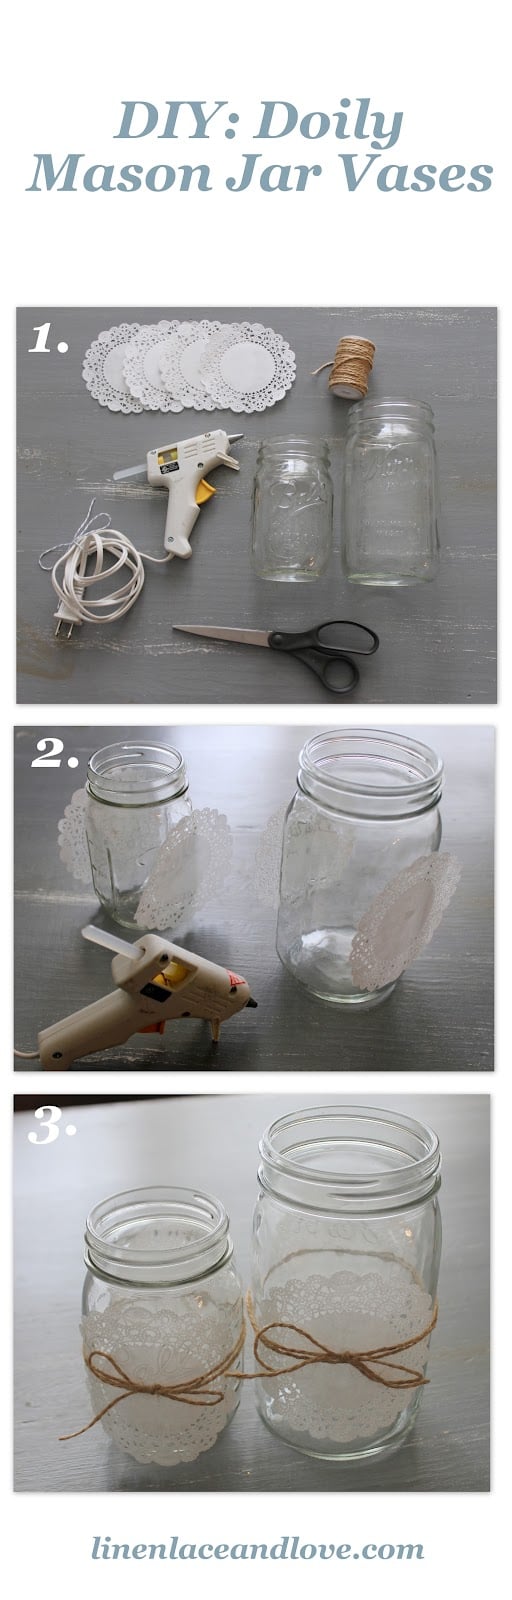 24 Great DIY Decorating Ideas with Mason Jars (3)